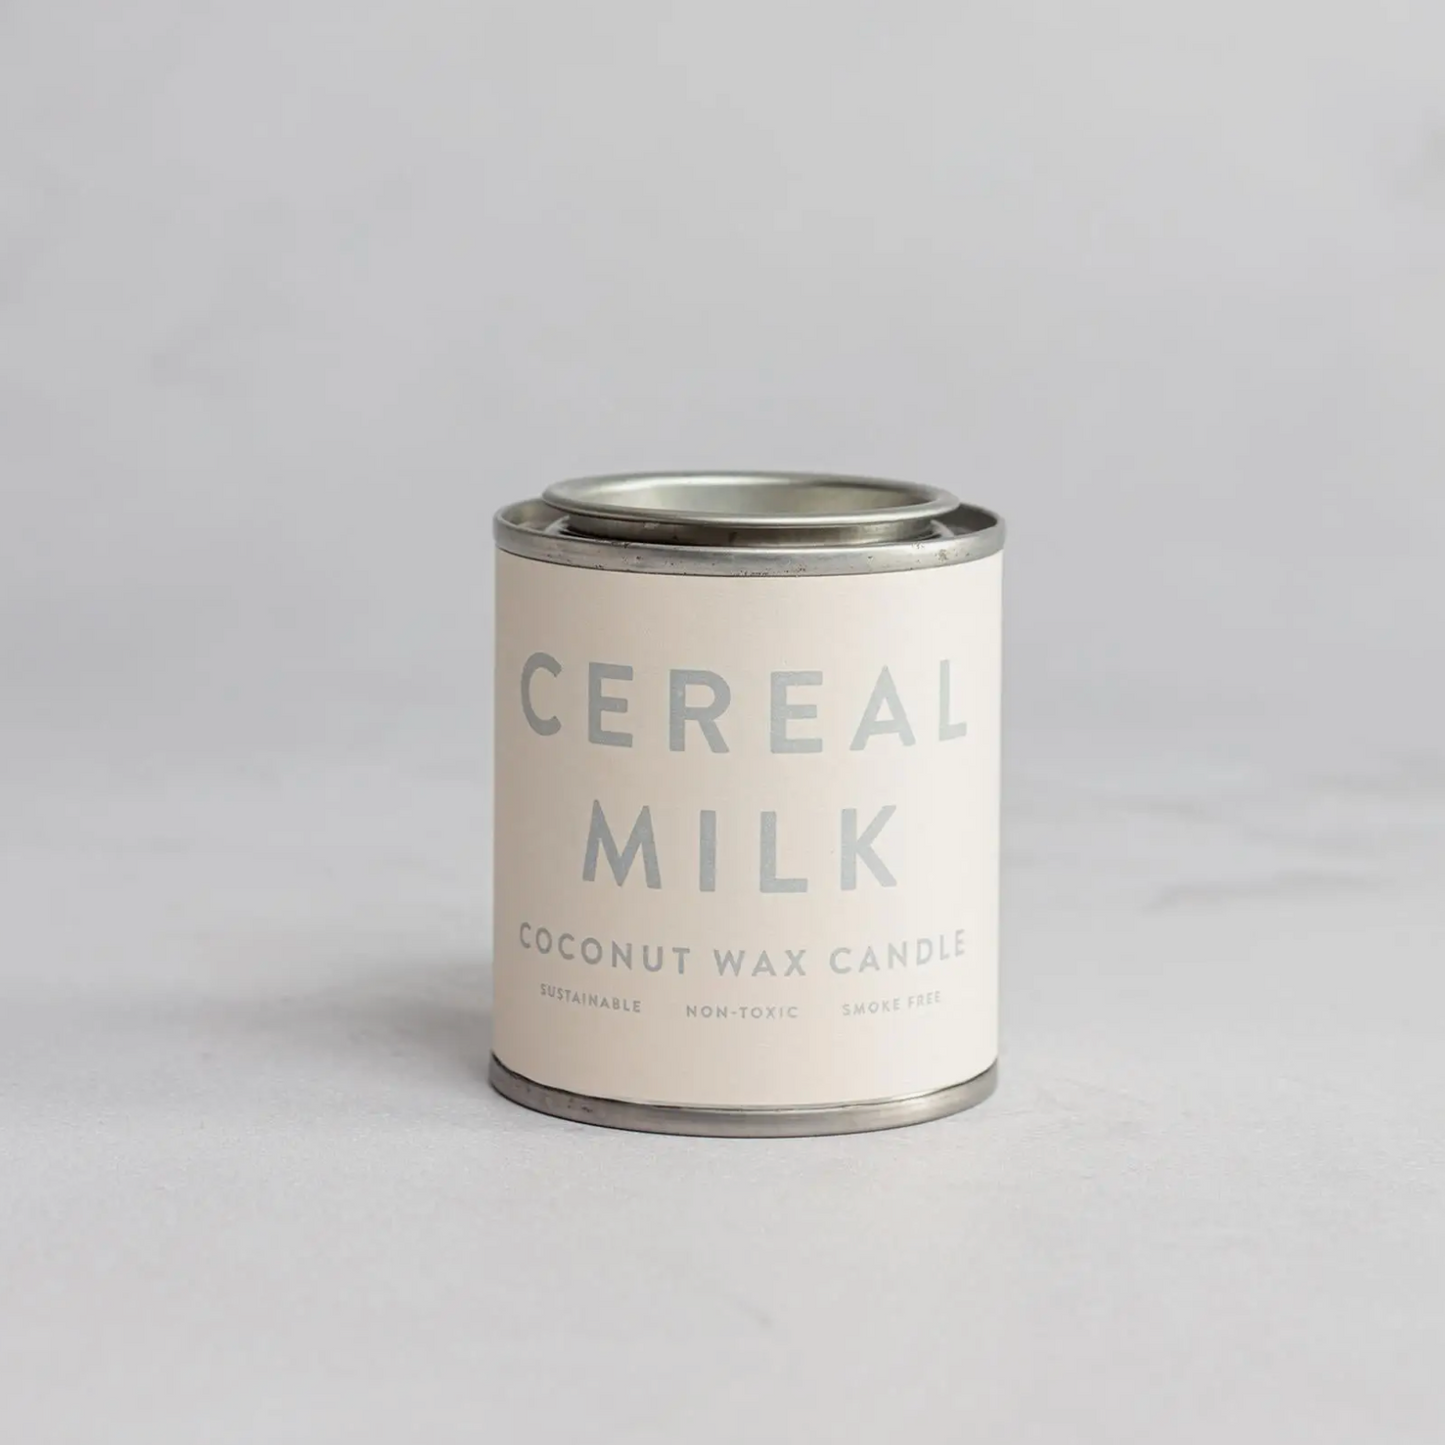 Cereal Milk Coconut Wax Candle